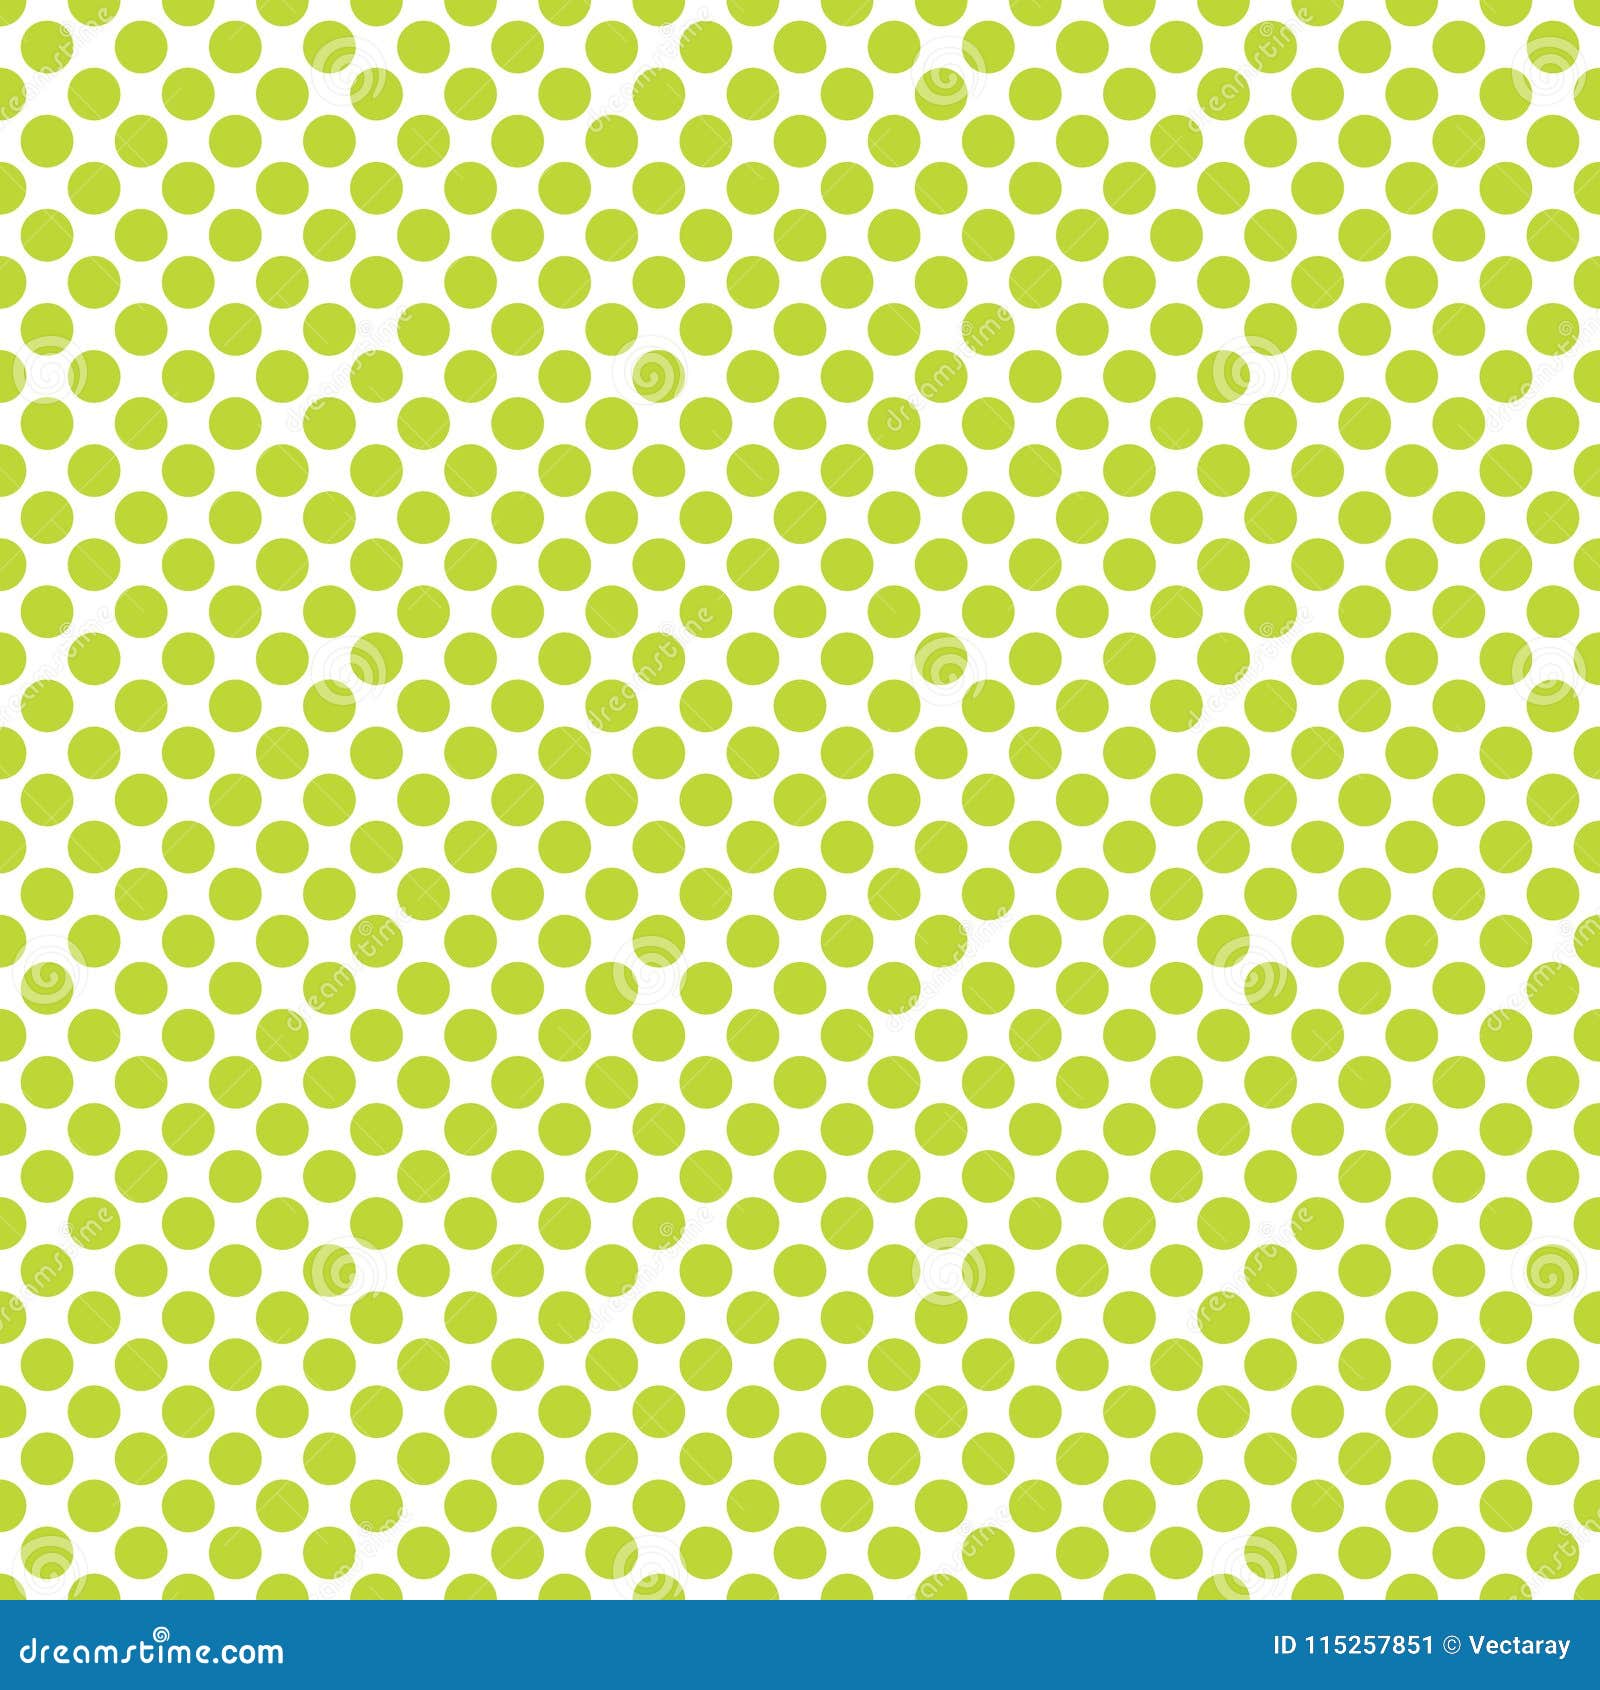 Seamless Polka Dot Pattern Texture Background Stock Illustration ...